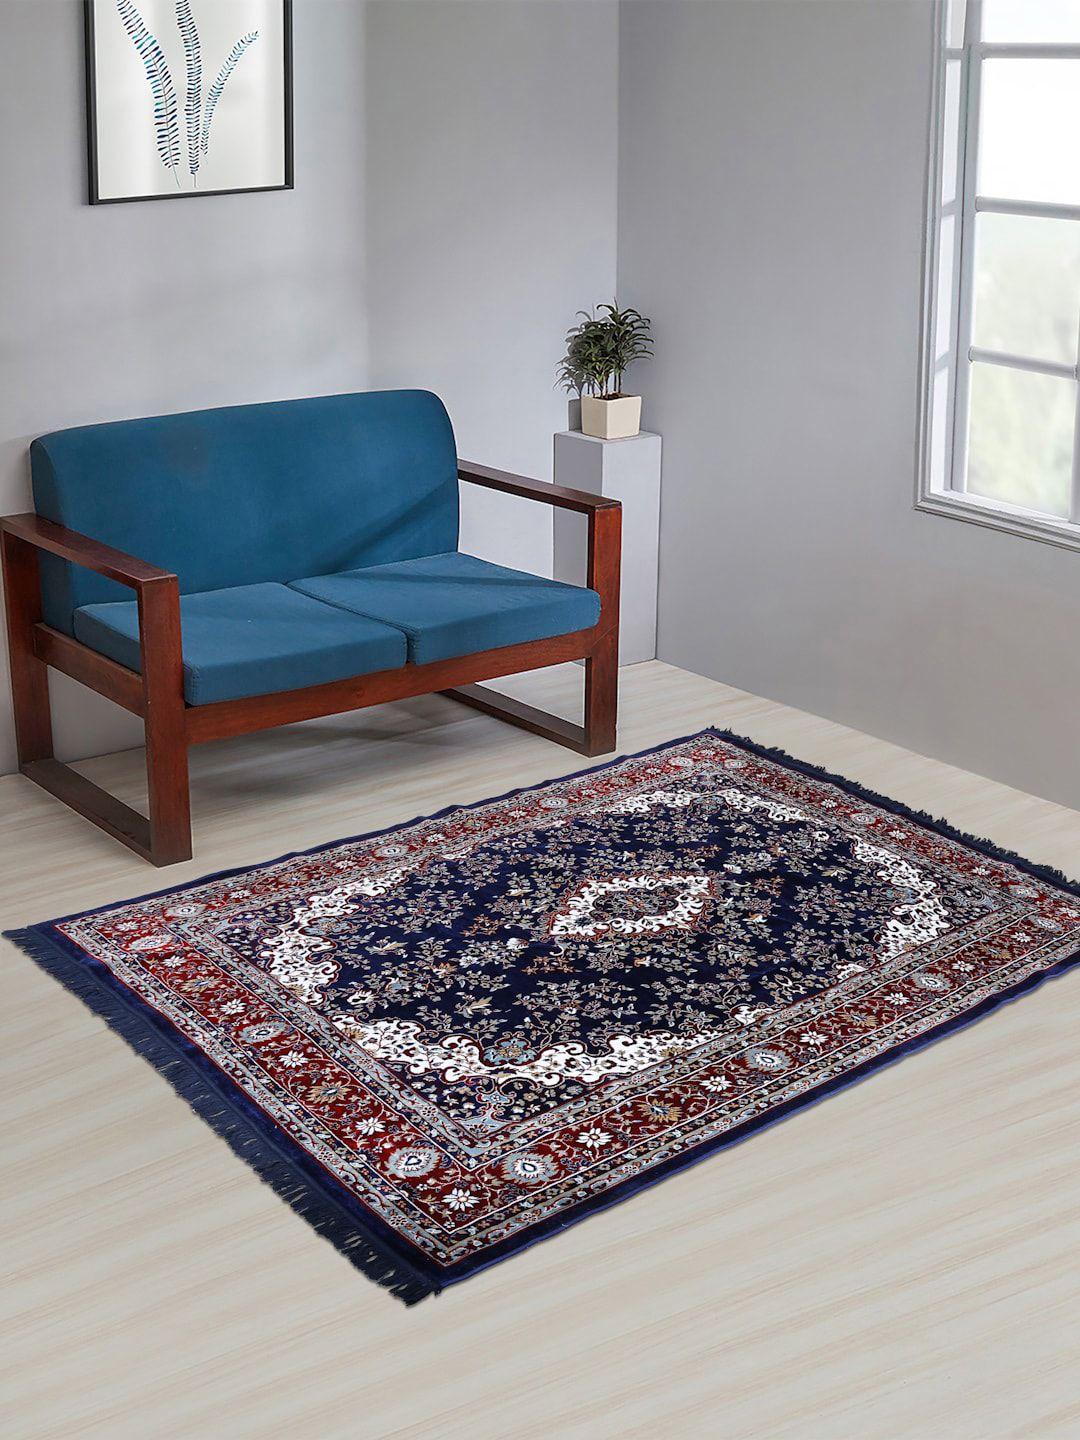 KLOTTHE Blue Floral Patterned Handmade Carpet Price in India